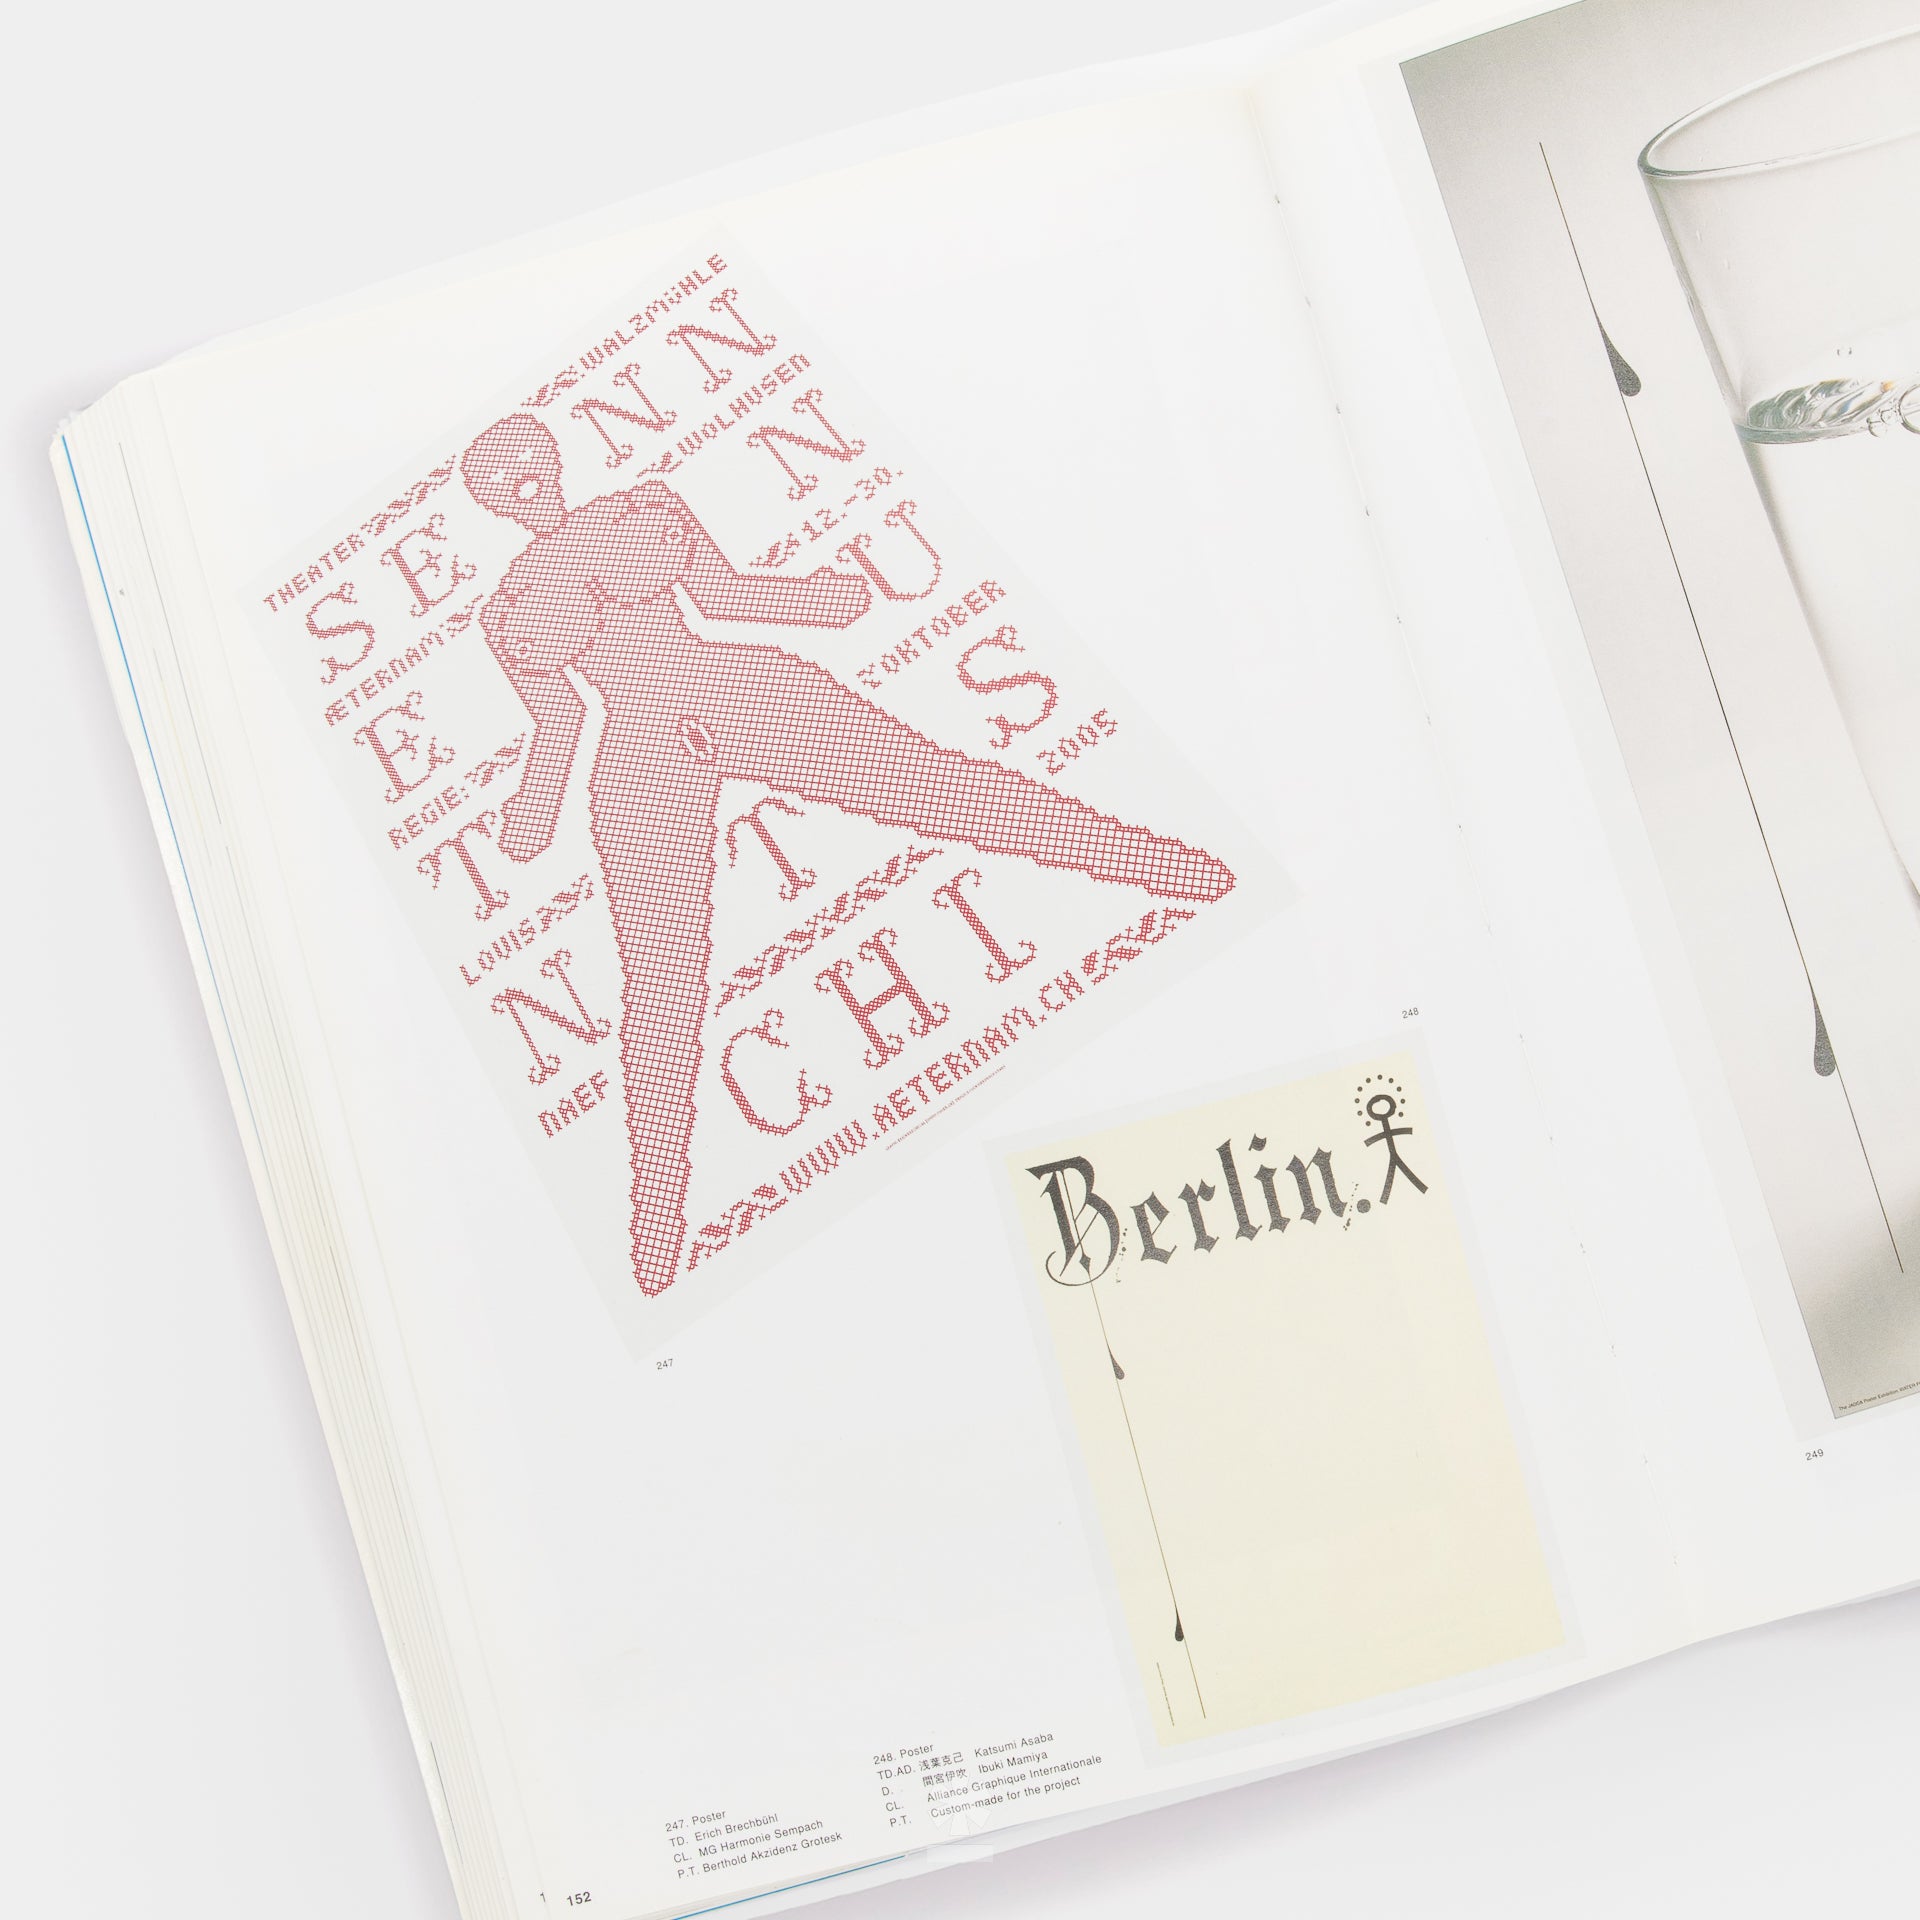 Tokyo TDC Vol.17 - The Best in International Typography & Design